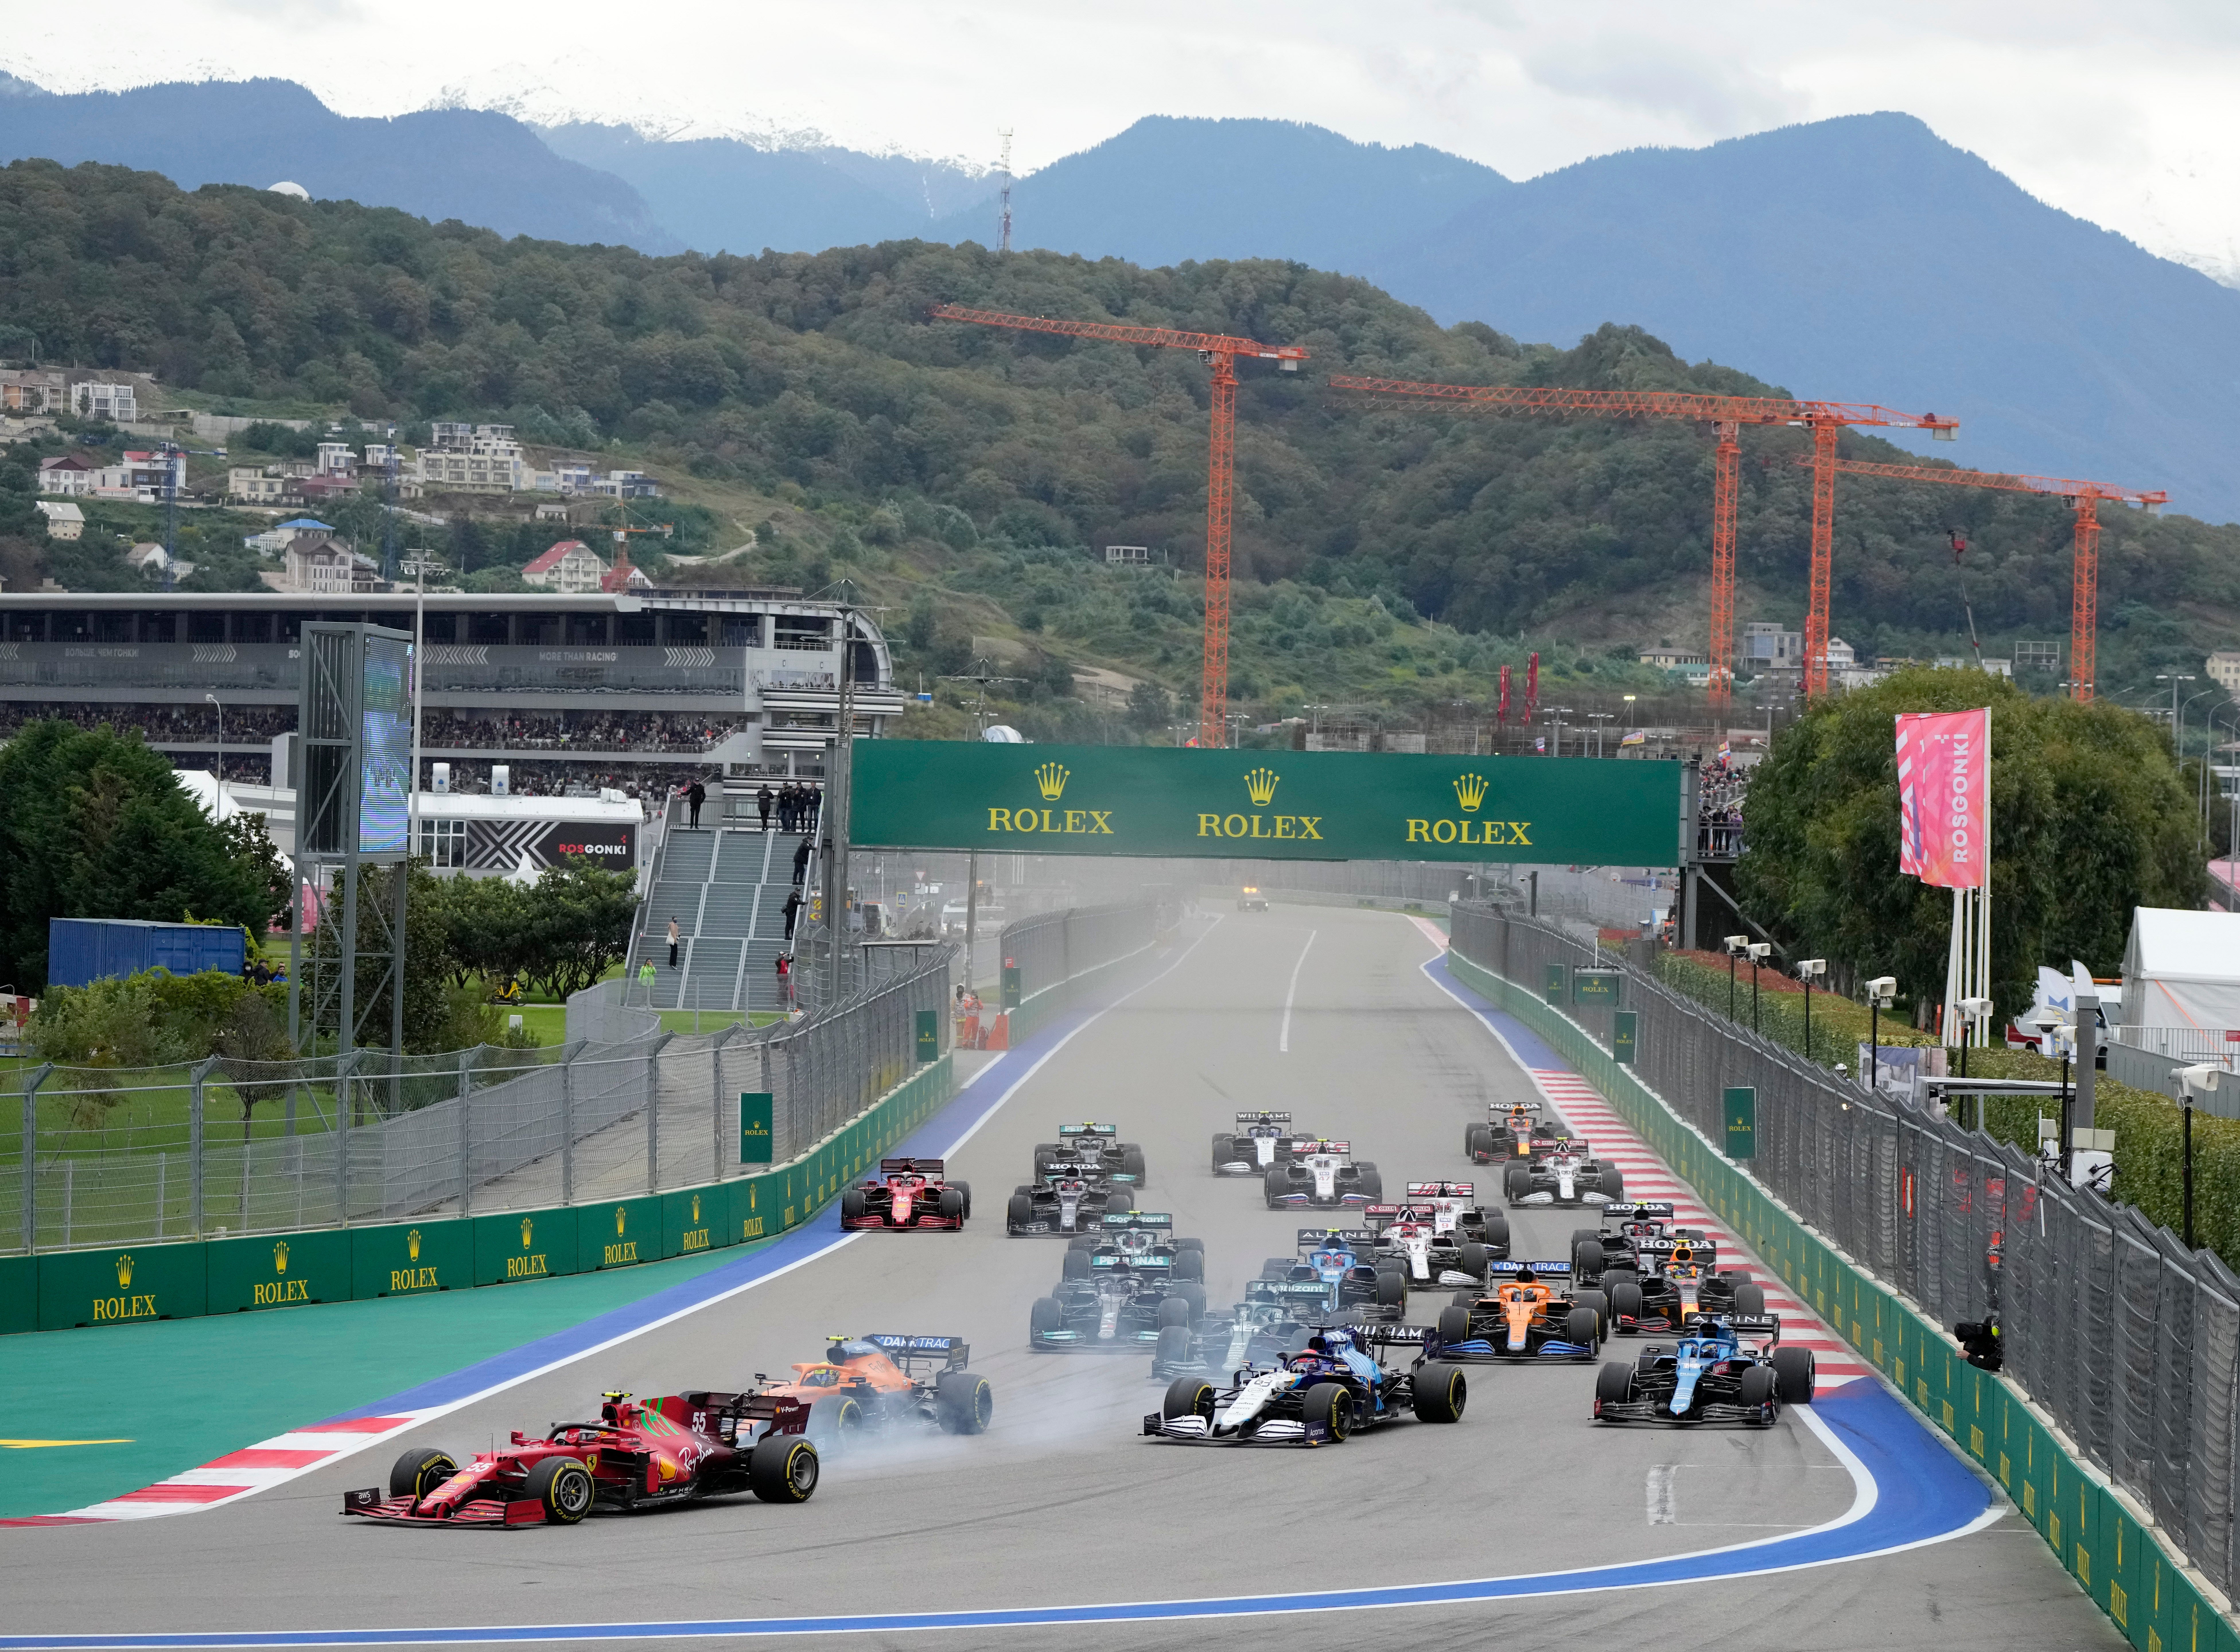 Ferrari’s Carlos Sainz Jr. leads into the first corner at the start of the Russian Formula One Grand Prix in Sochi (Sergei Grits/AP)